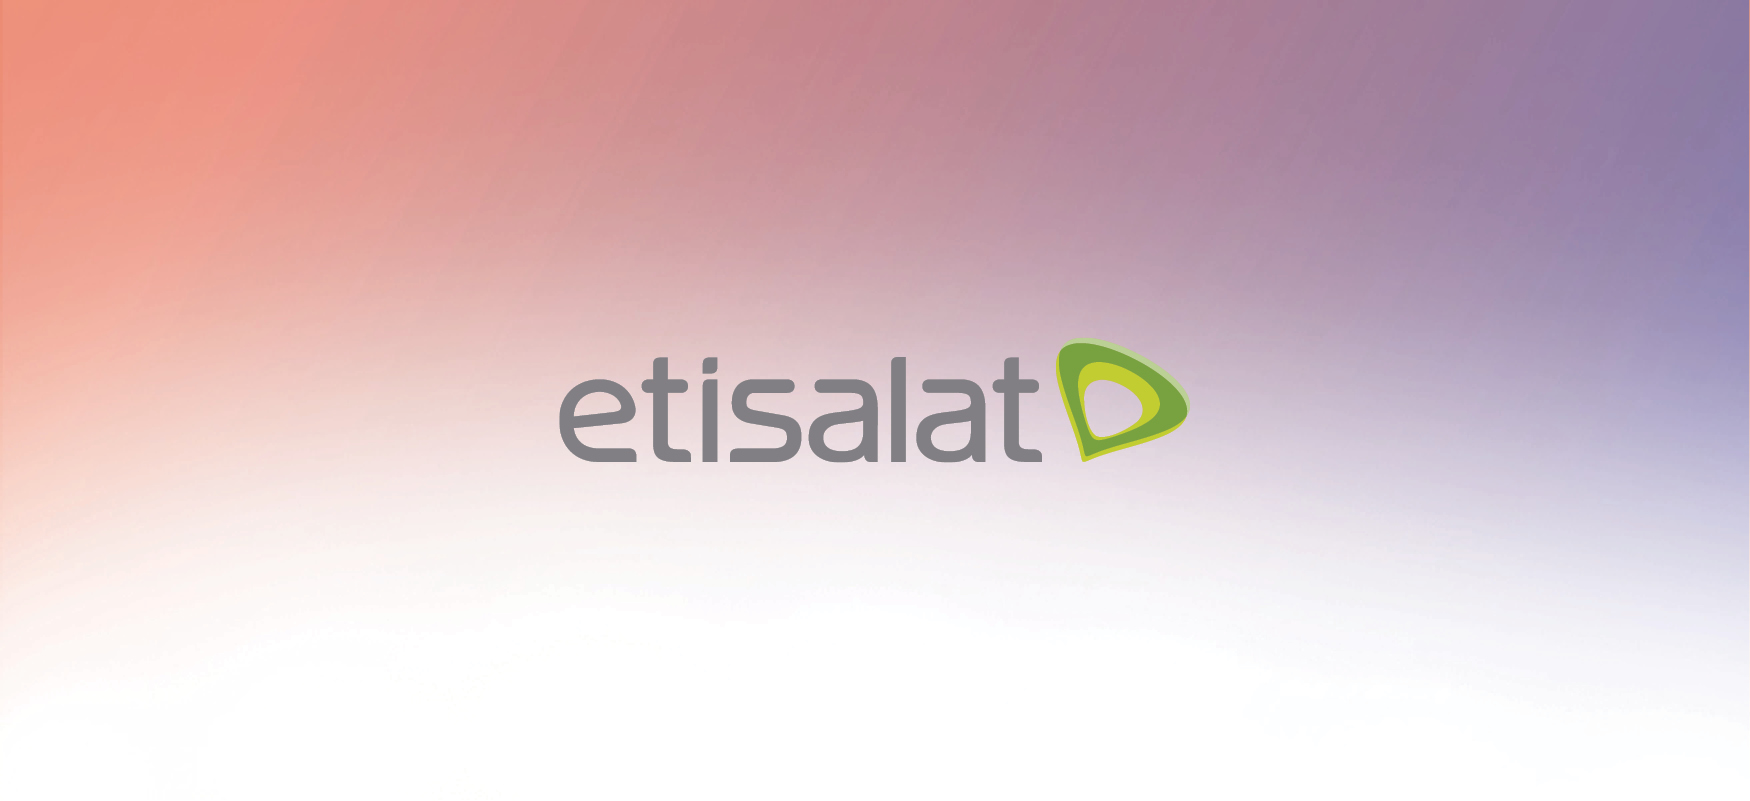 Epsilon Chooses Etisalat’s SmartHub for its Middle Eastern Network Exchange